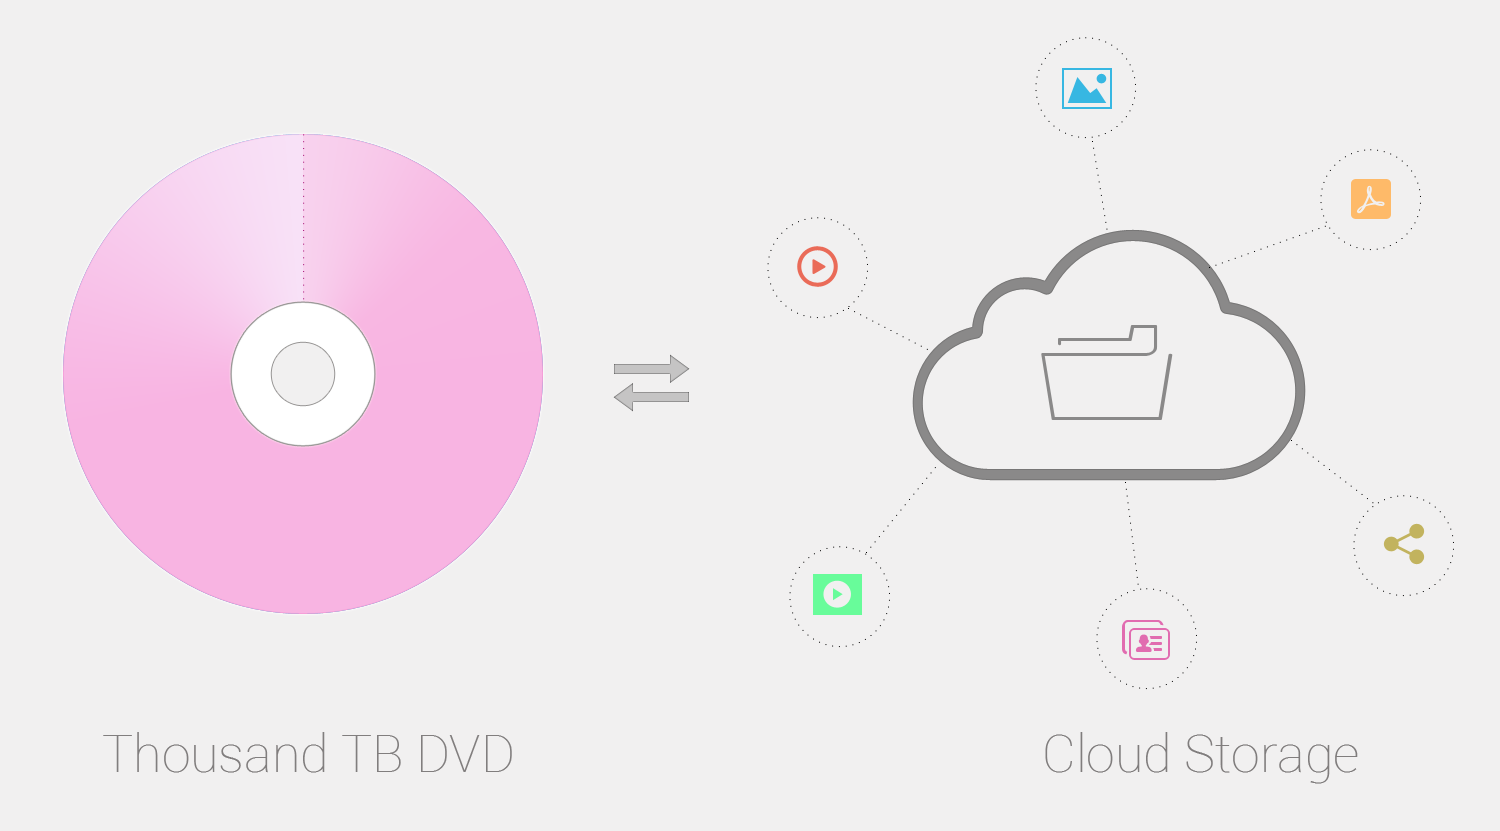 TB DVD Vs. Cloud Storage